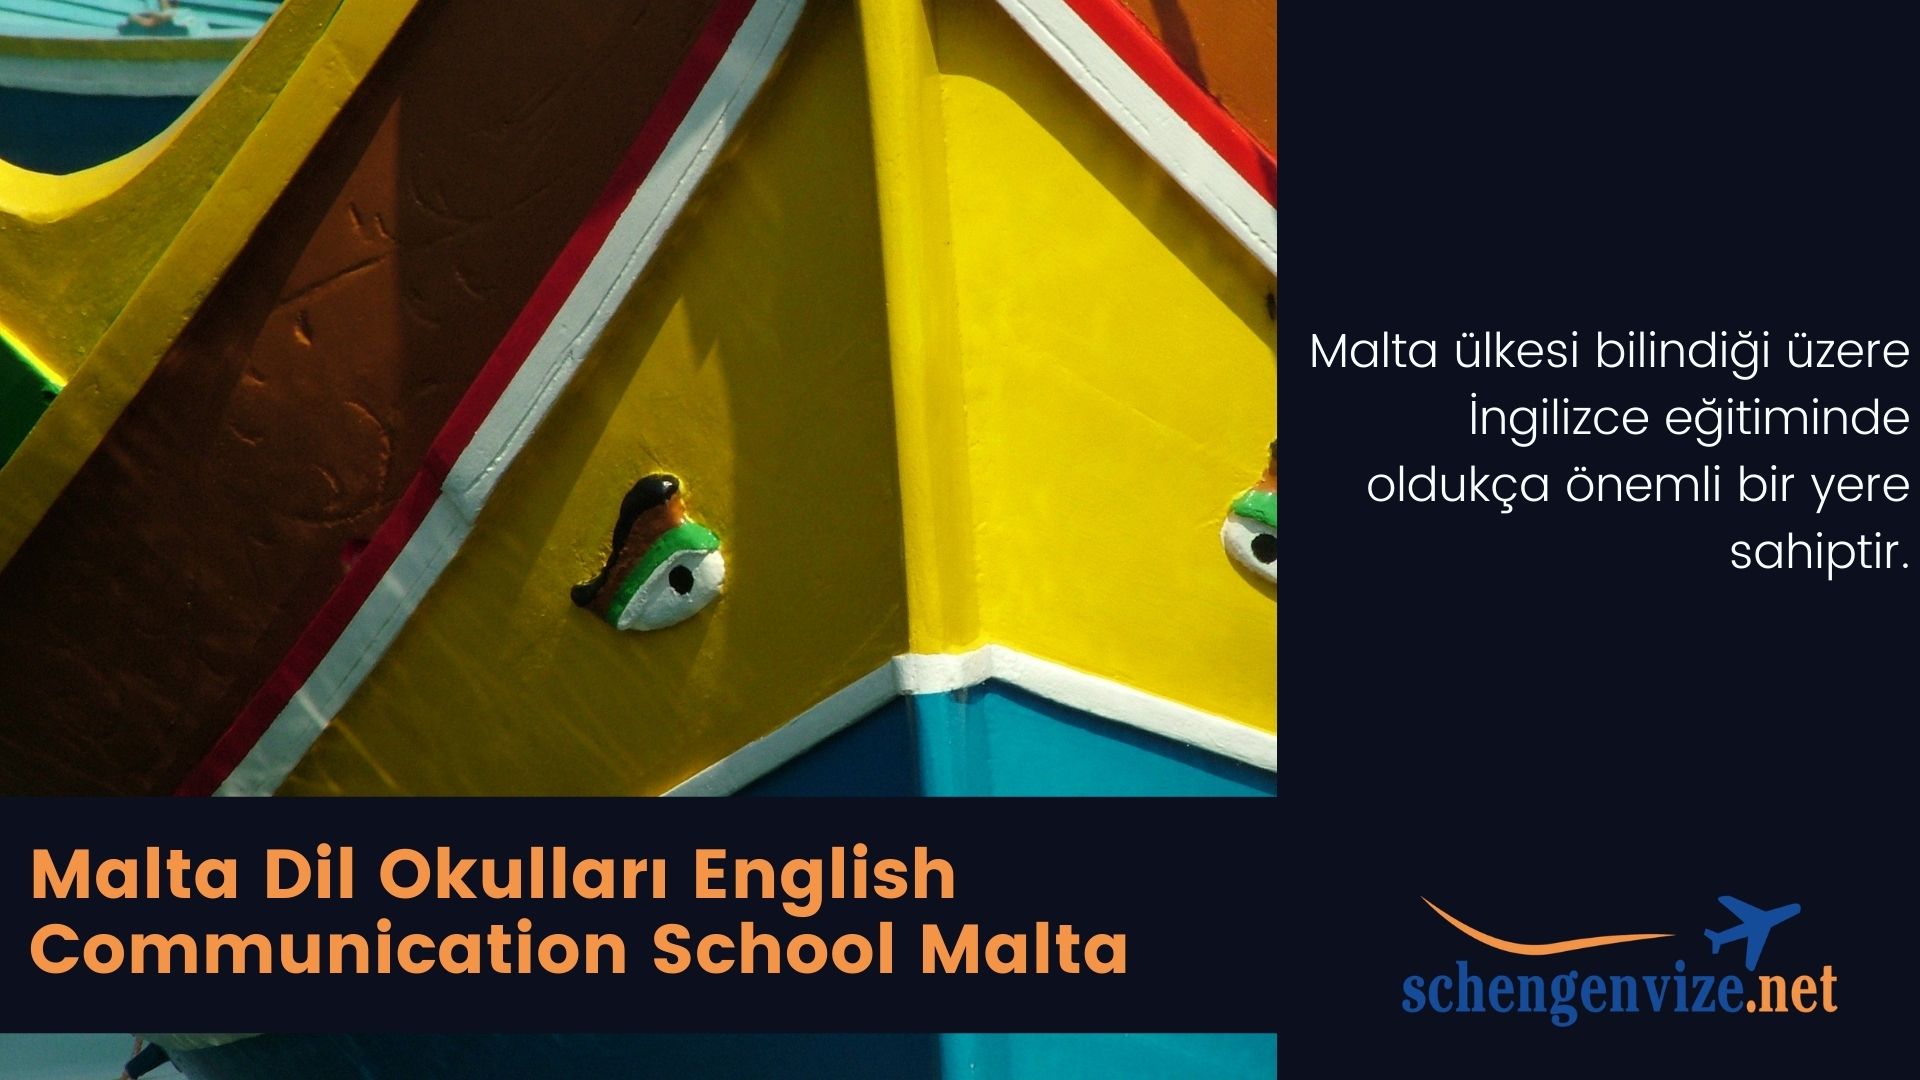 English Communication School Malta